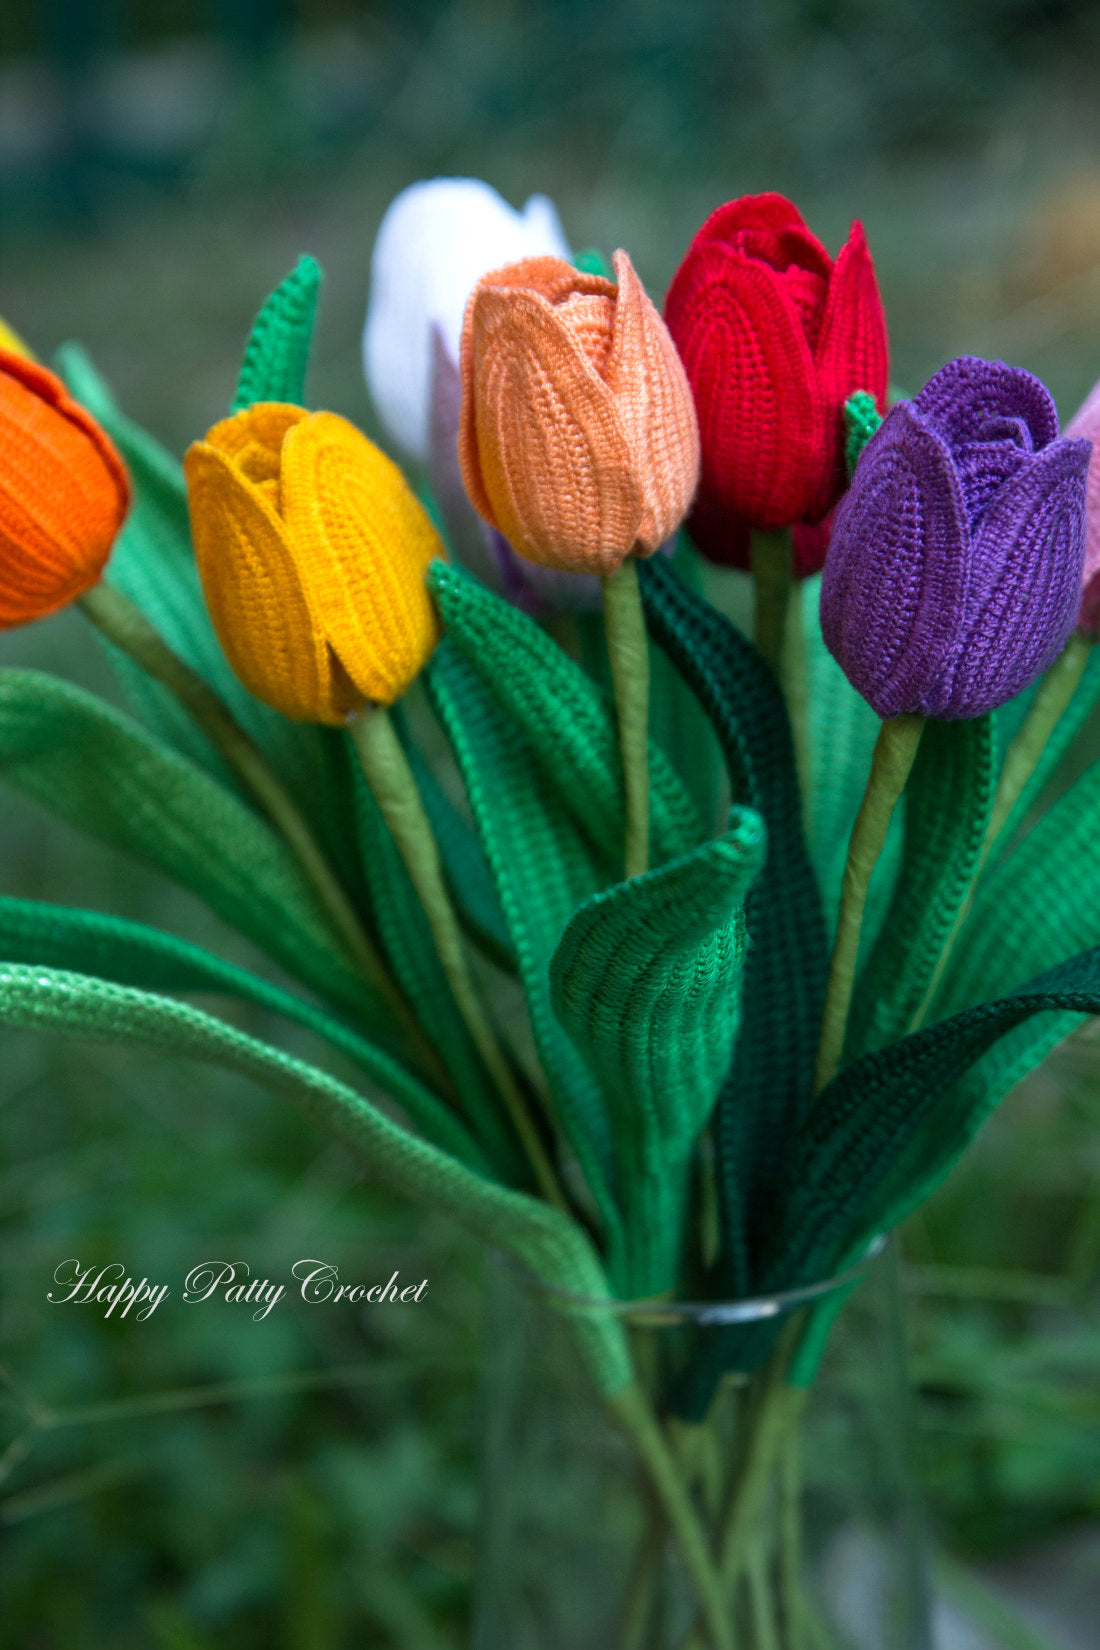 Tulips DONATIONWARE crochet pattern